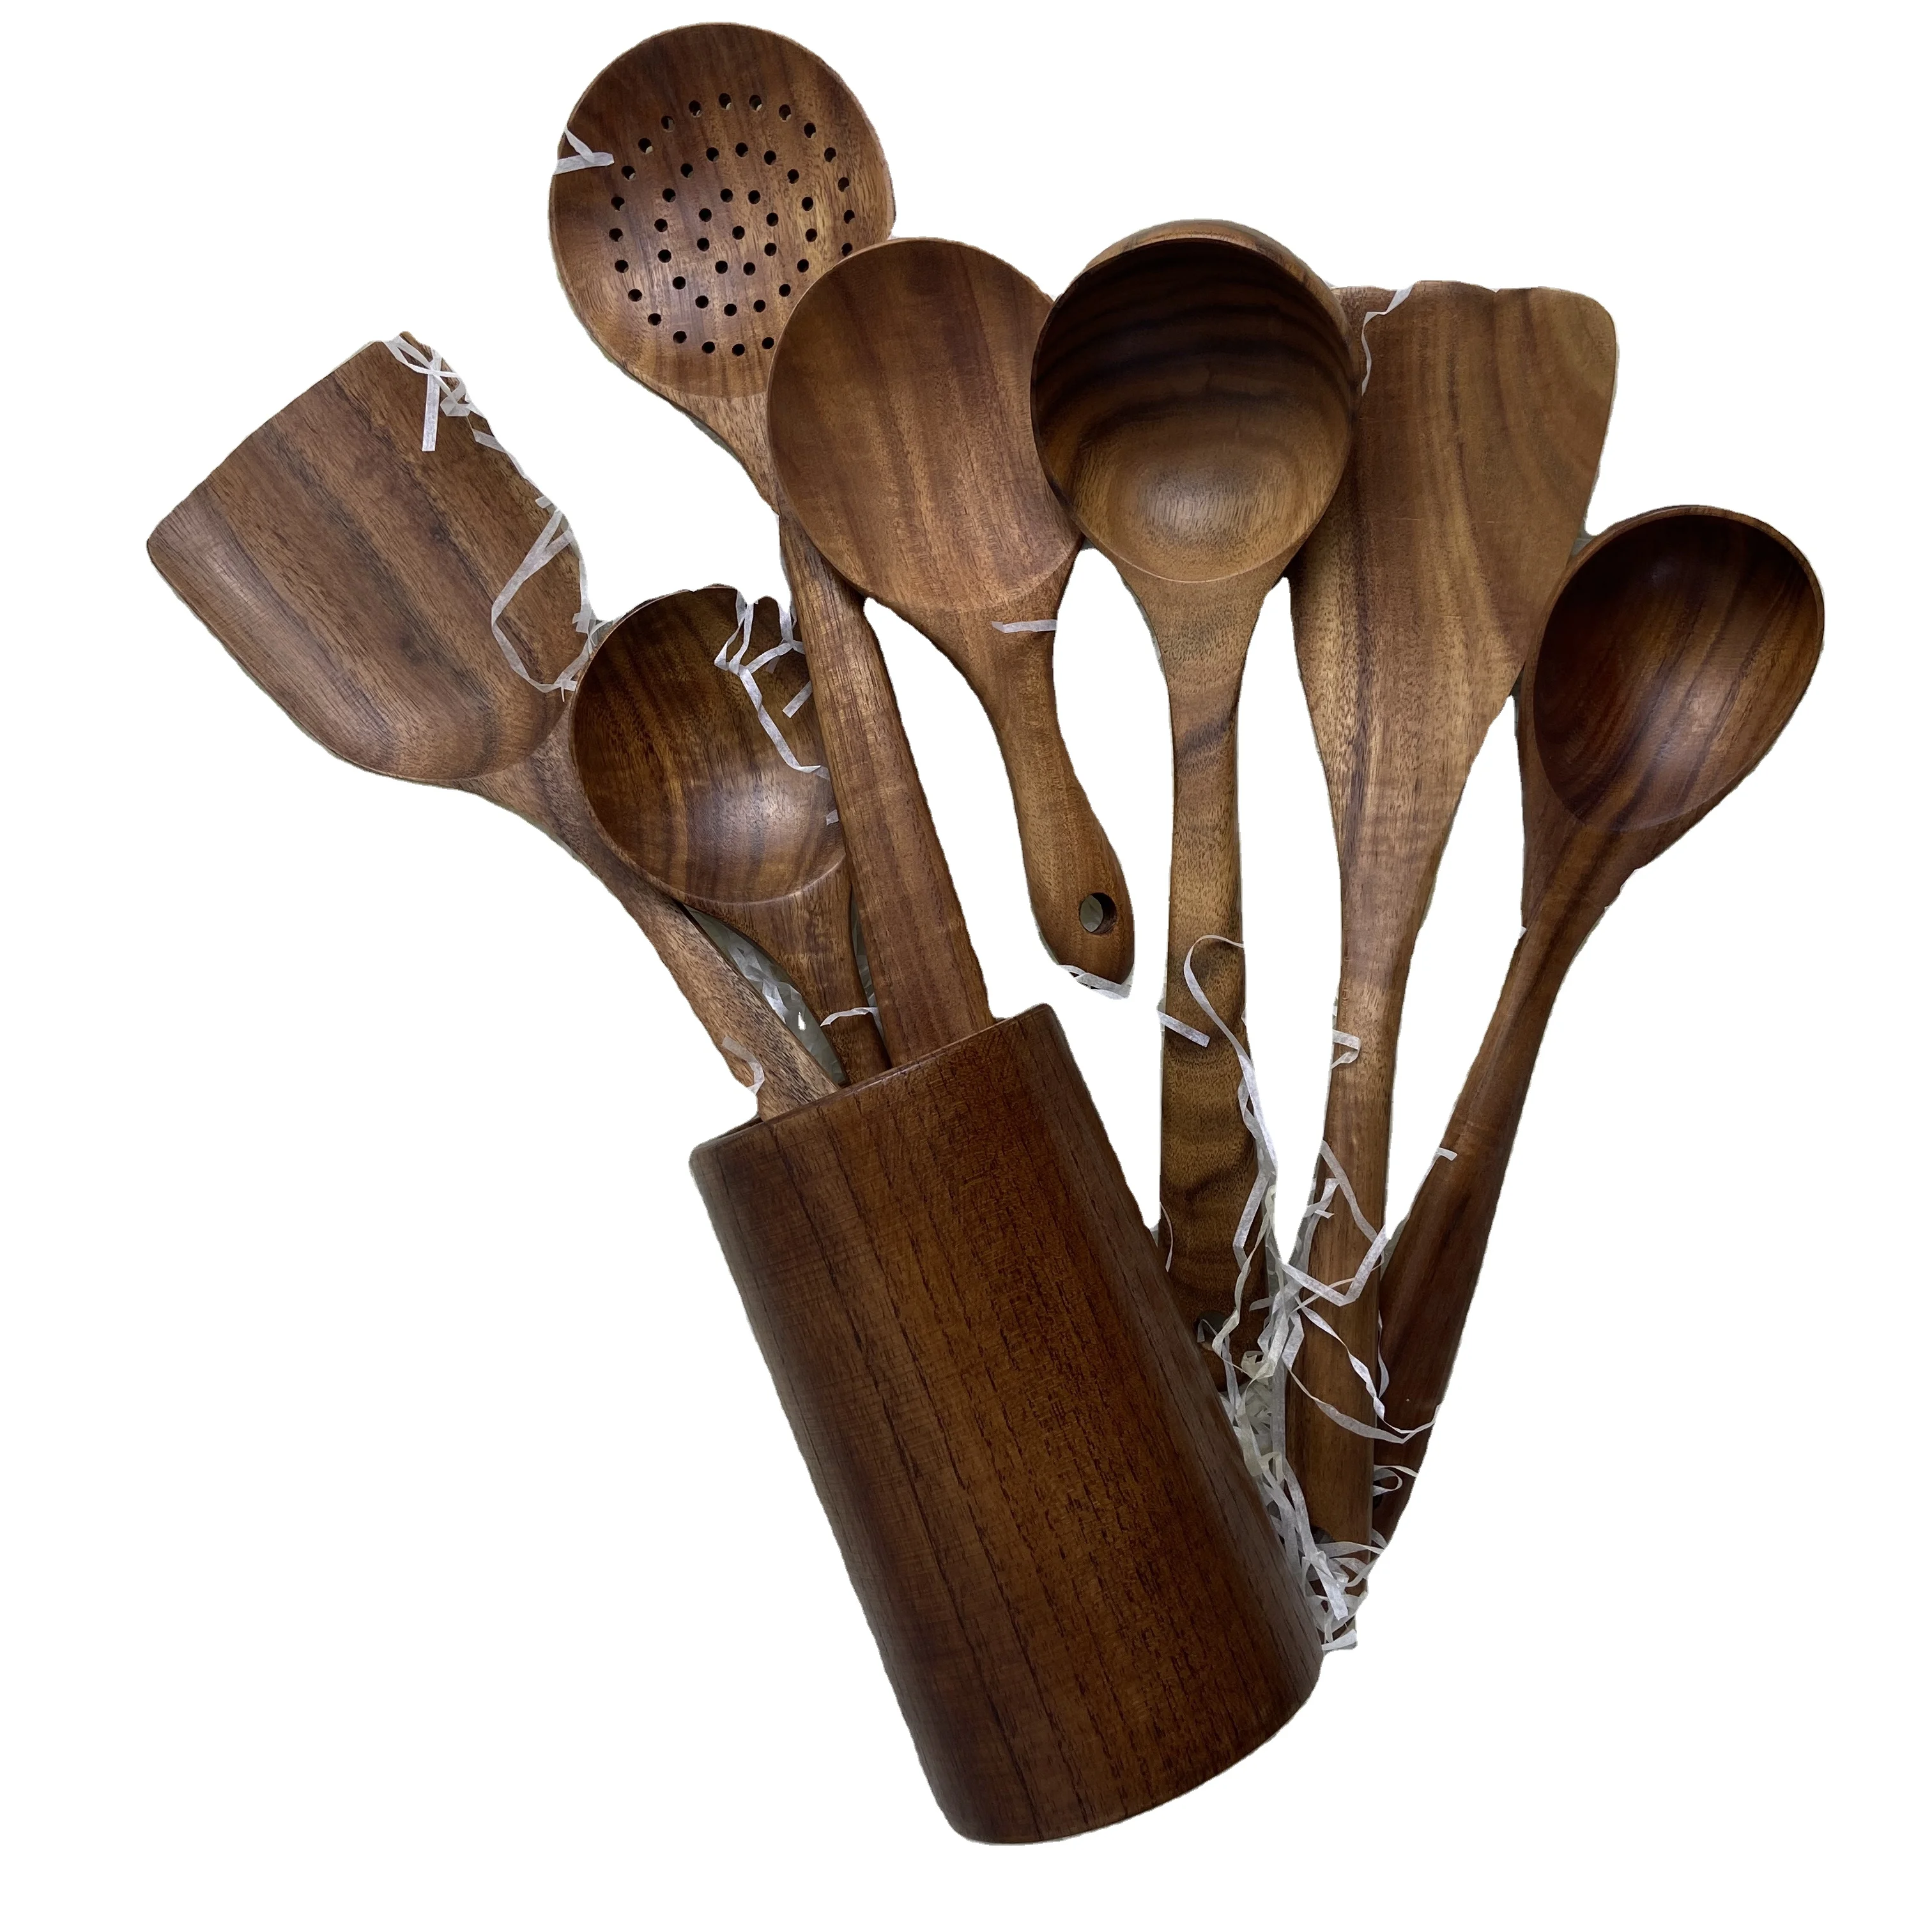 

DiYue Housewares DIY205181 Home Kitchen Tools Acacia Teak Wood Cooking Spoon Spatula Set Gift Stock Solid Wooden Holder Utensils, Natural wood color